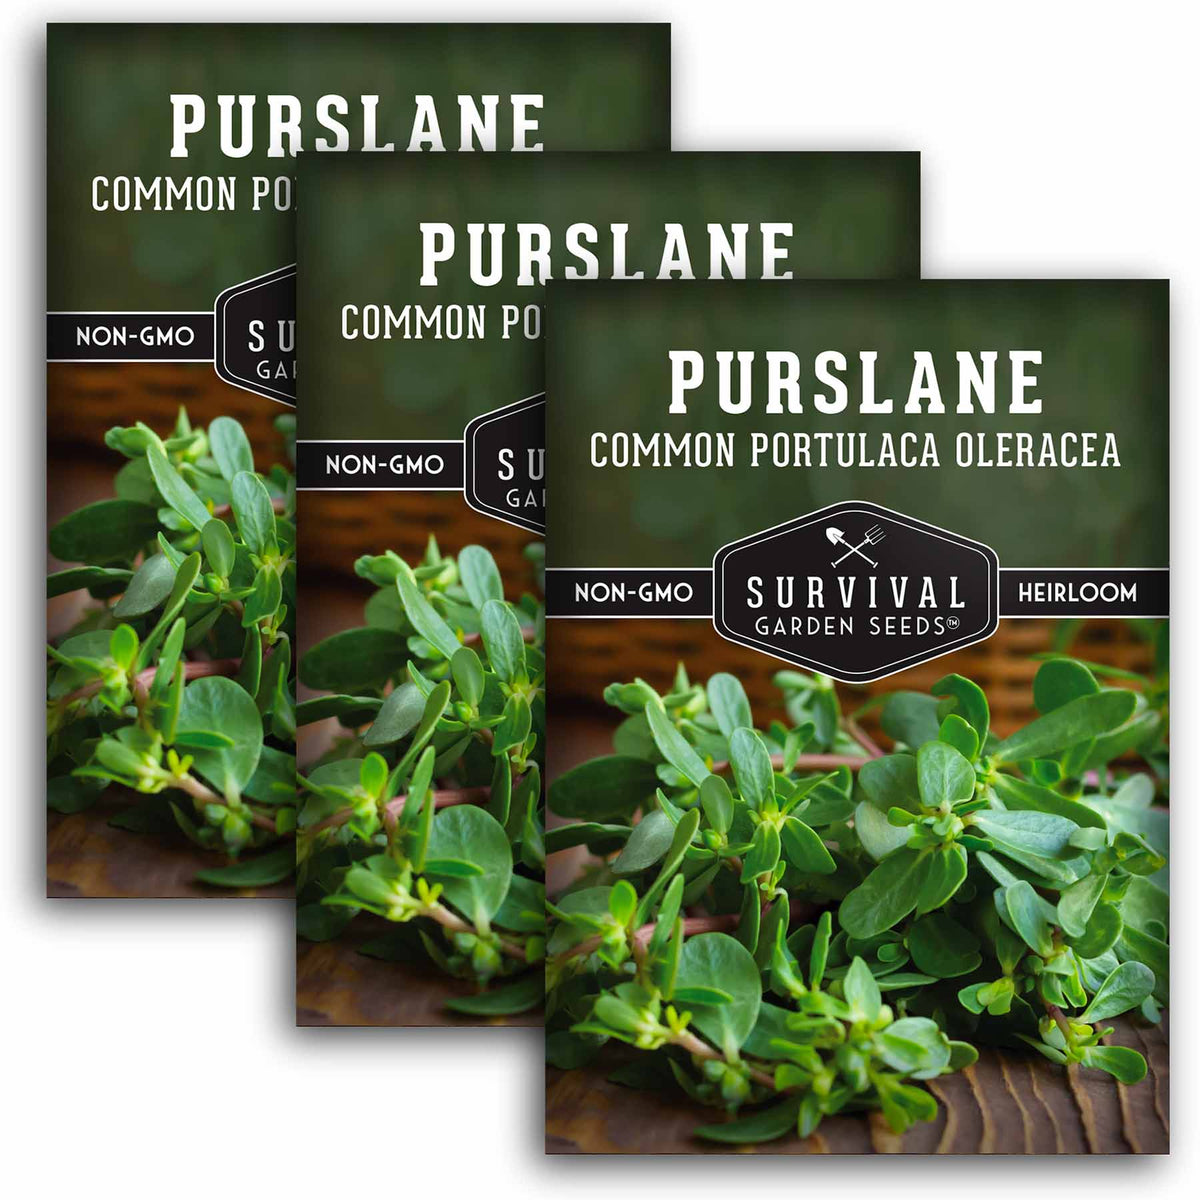 3 packets of Purslane seeds